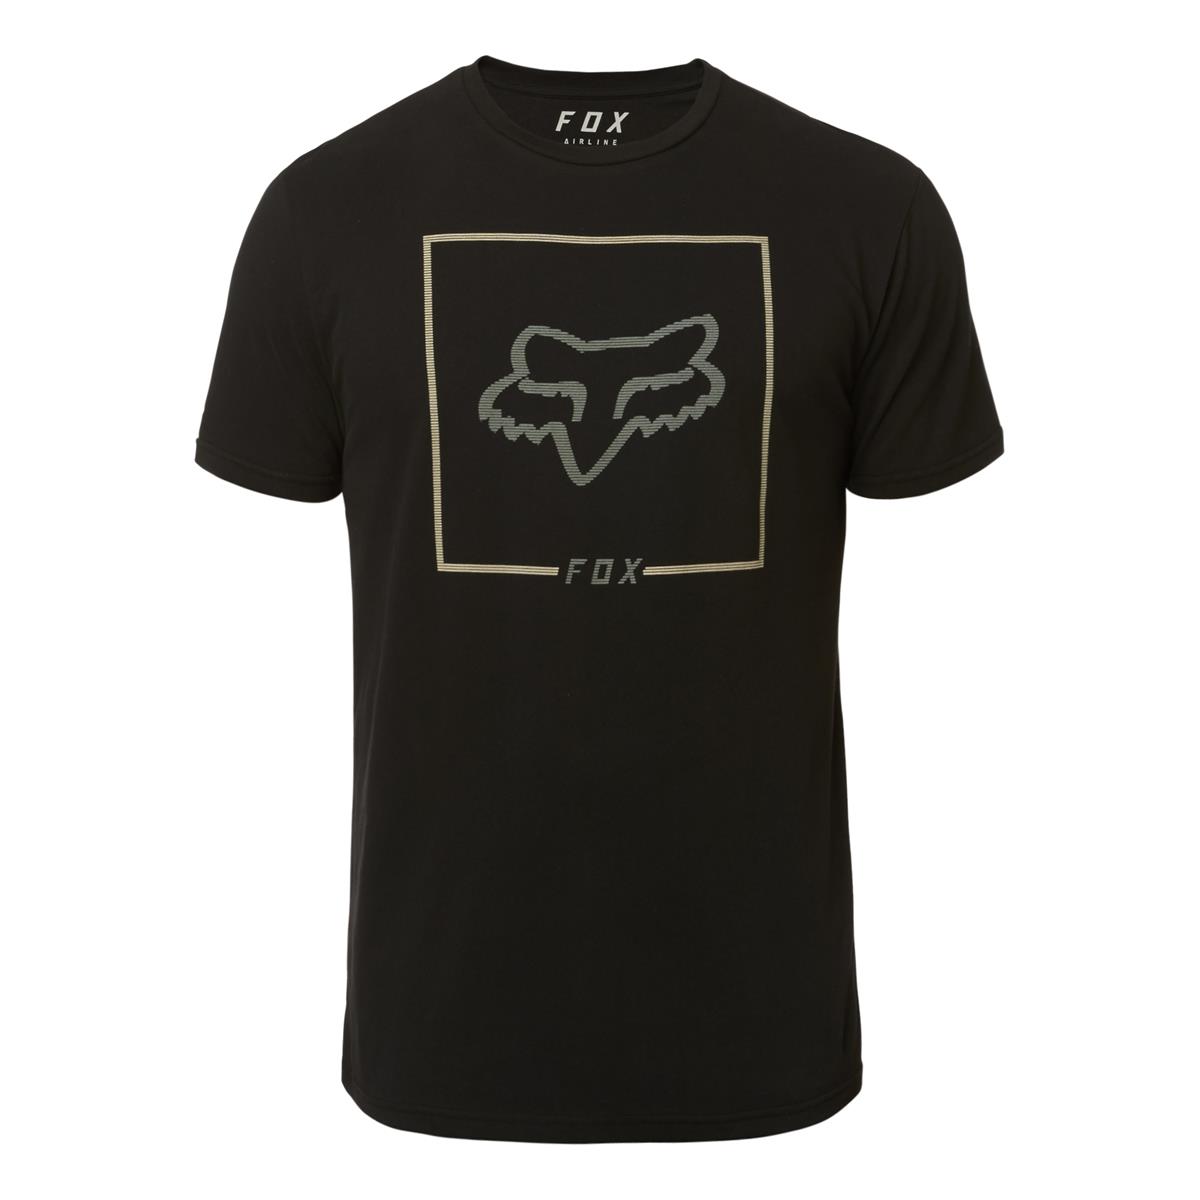 Fox T-Shirt Chapped Airline Black